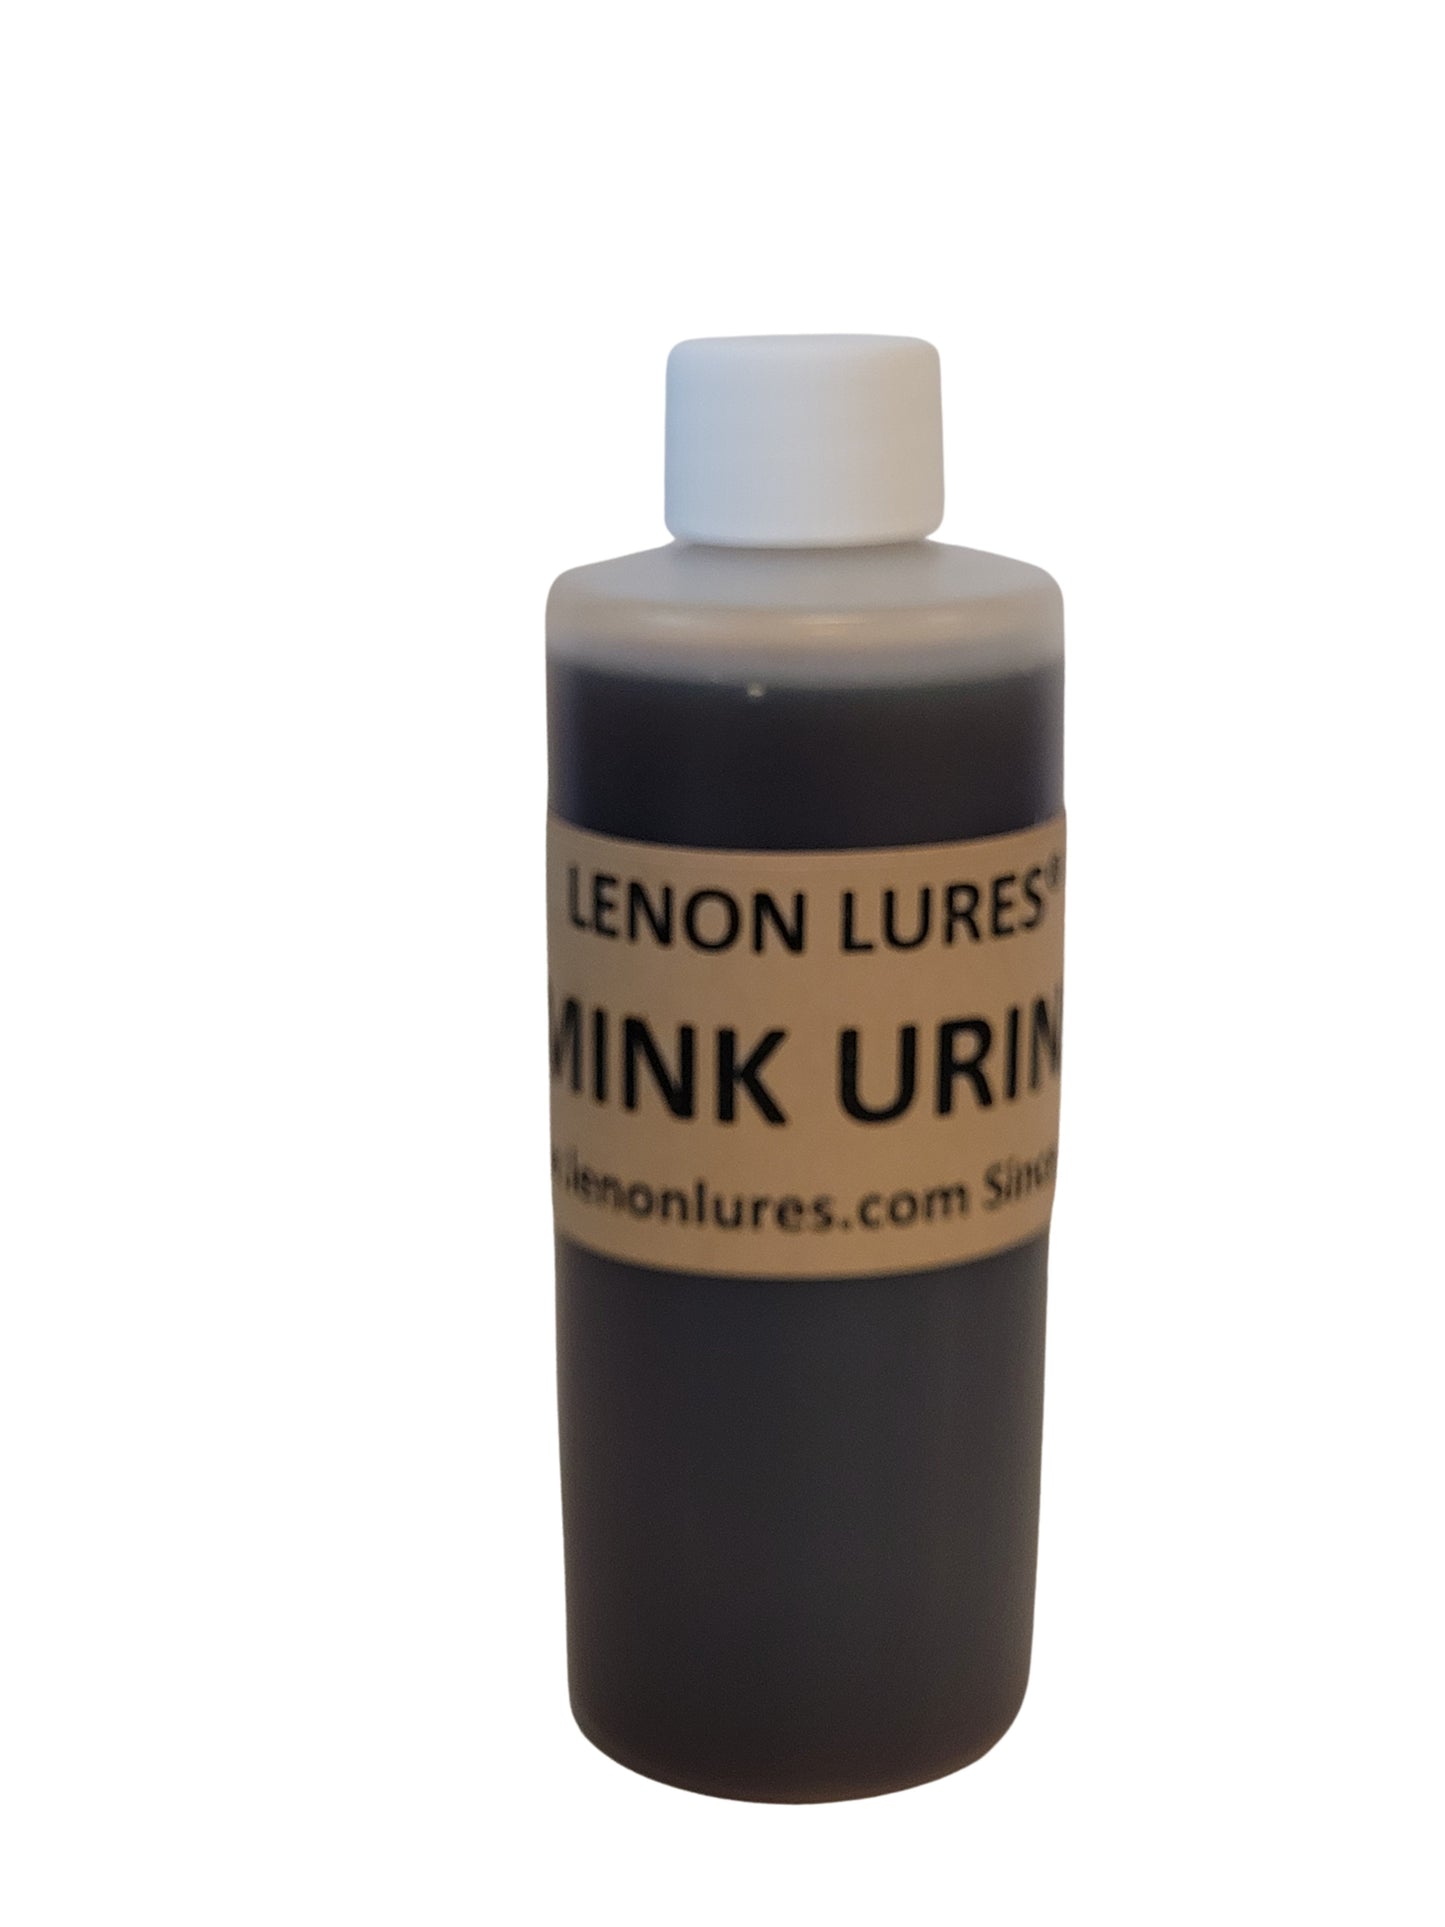 Lenon's Mink Urine